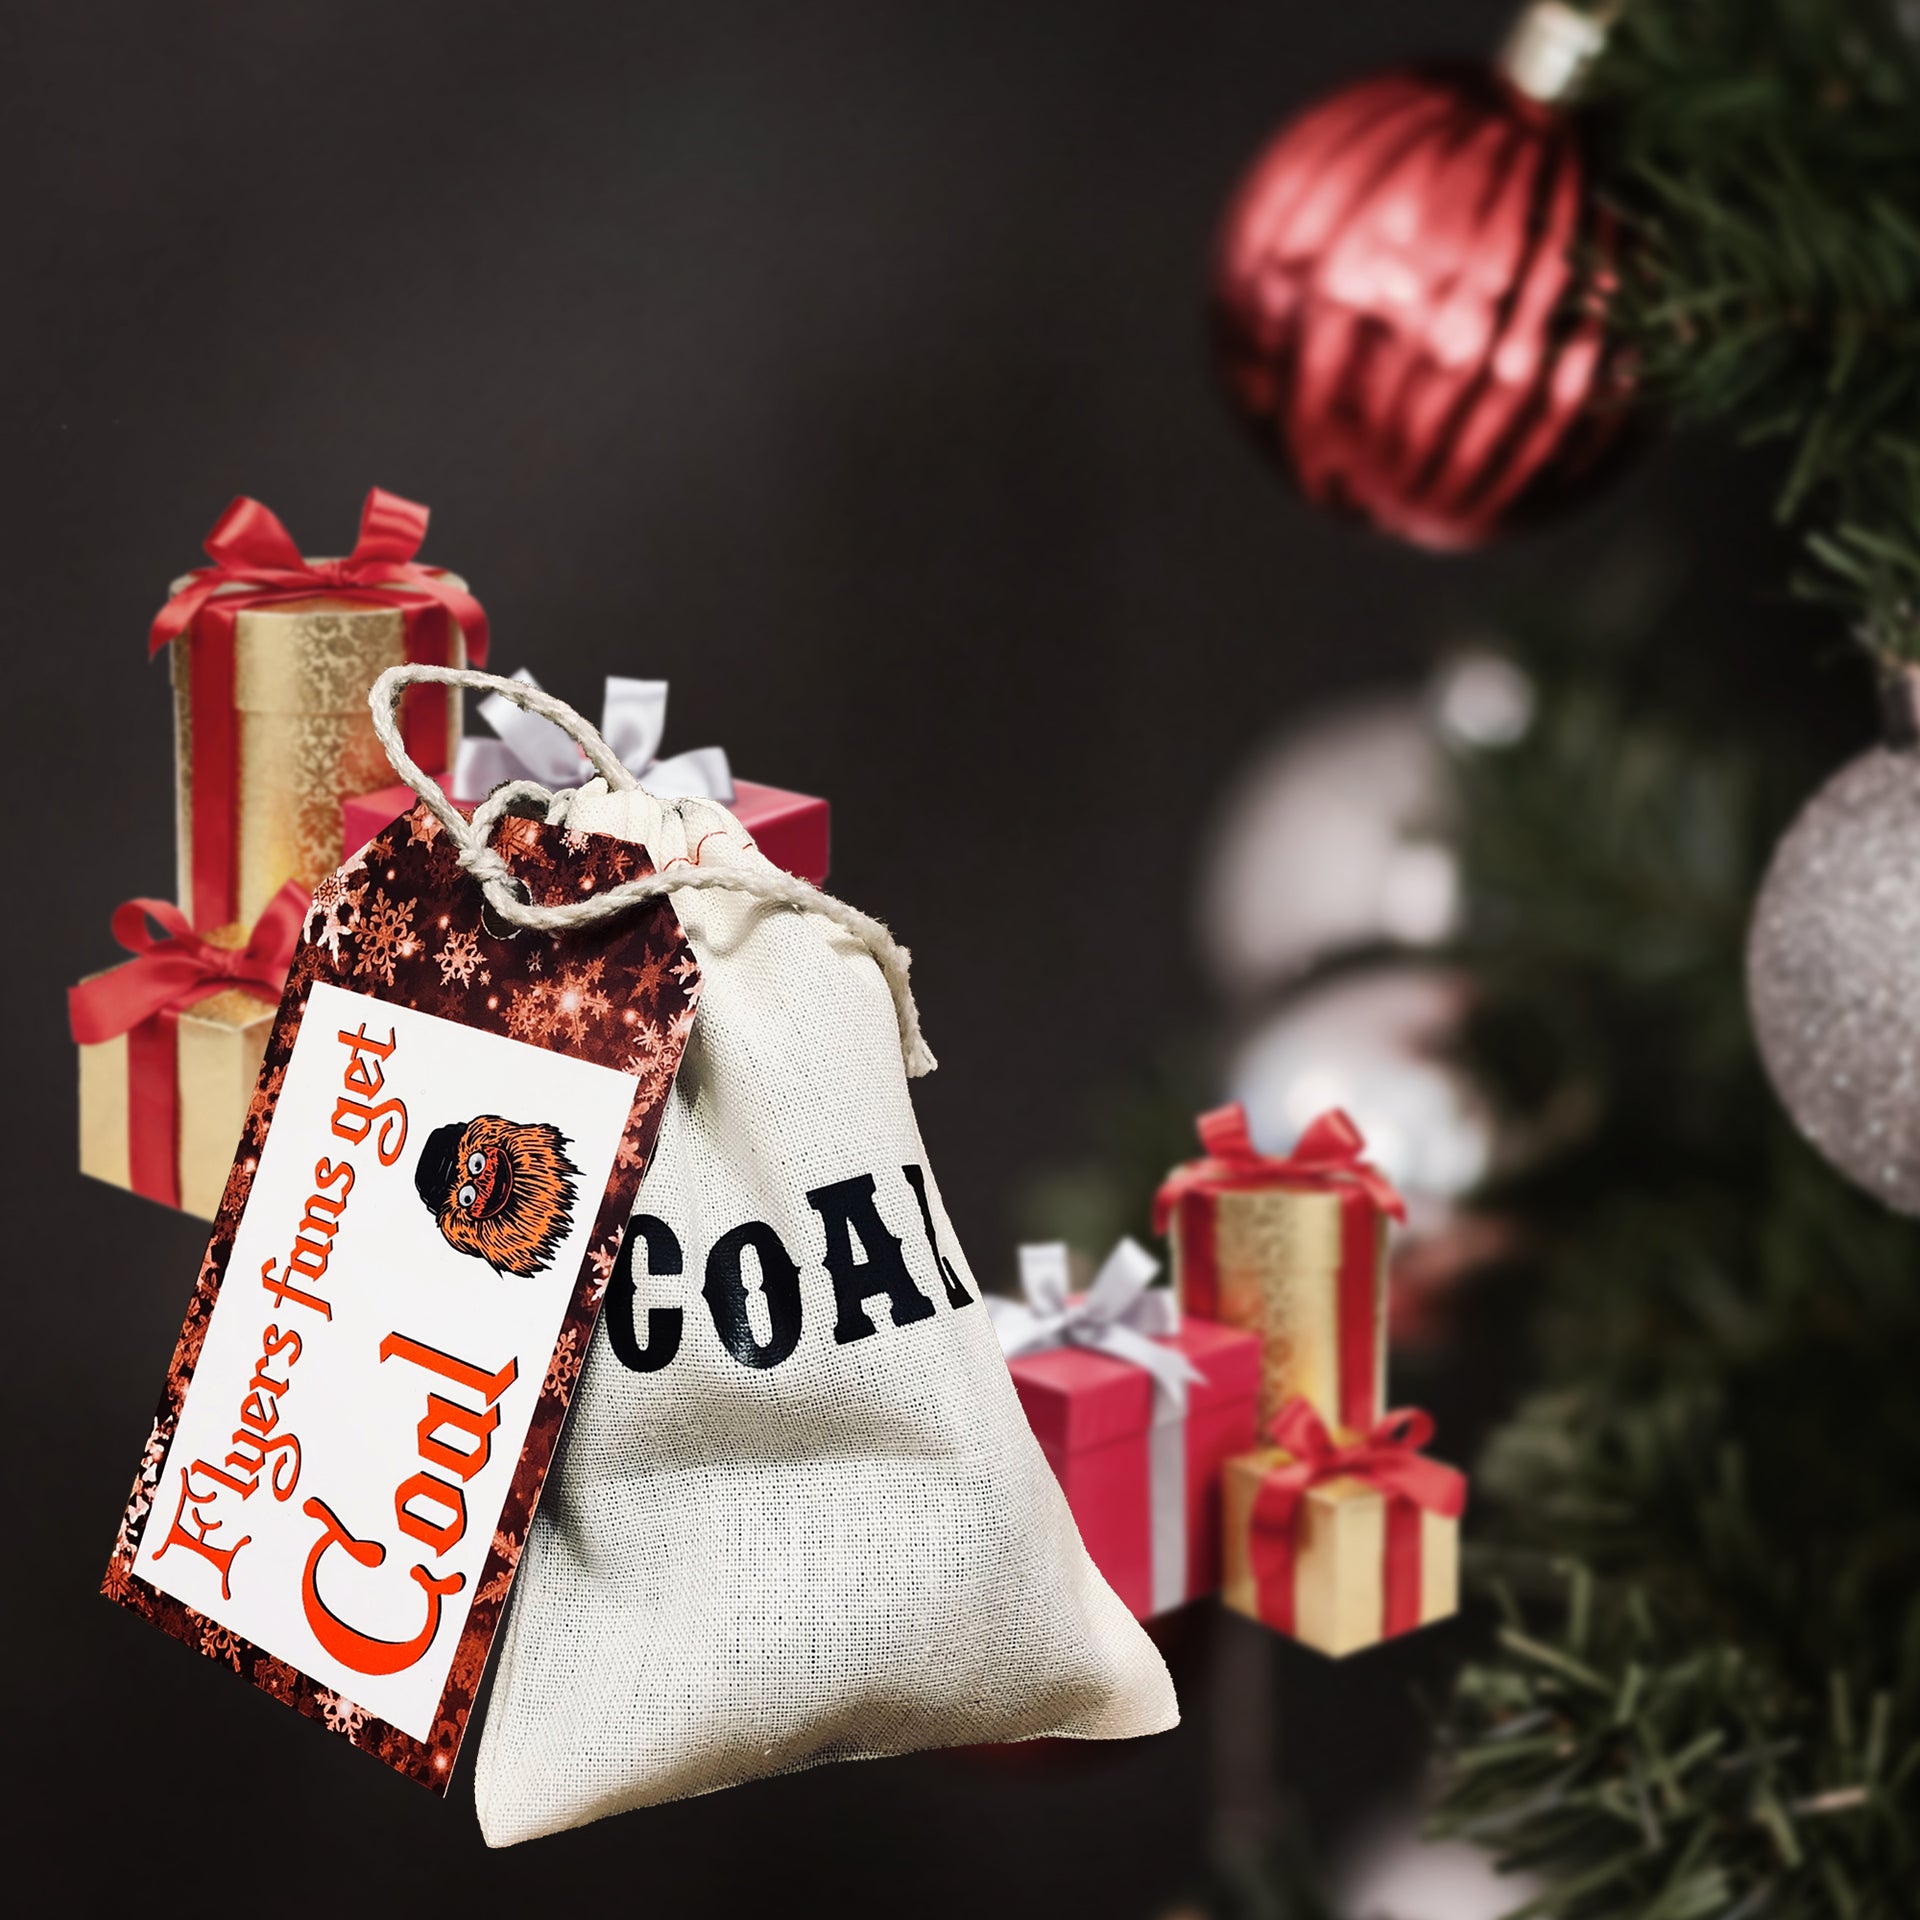 Christmas Naughty Fan Rivalry Bag of Coal - Dynasty Sports & Framing 